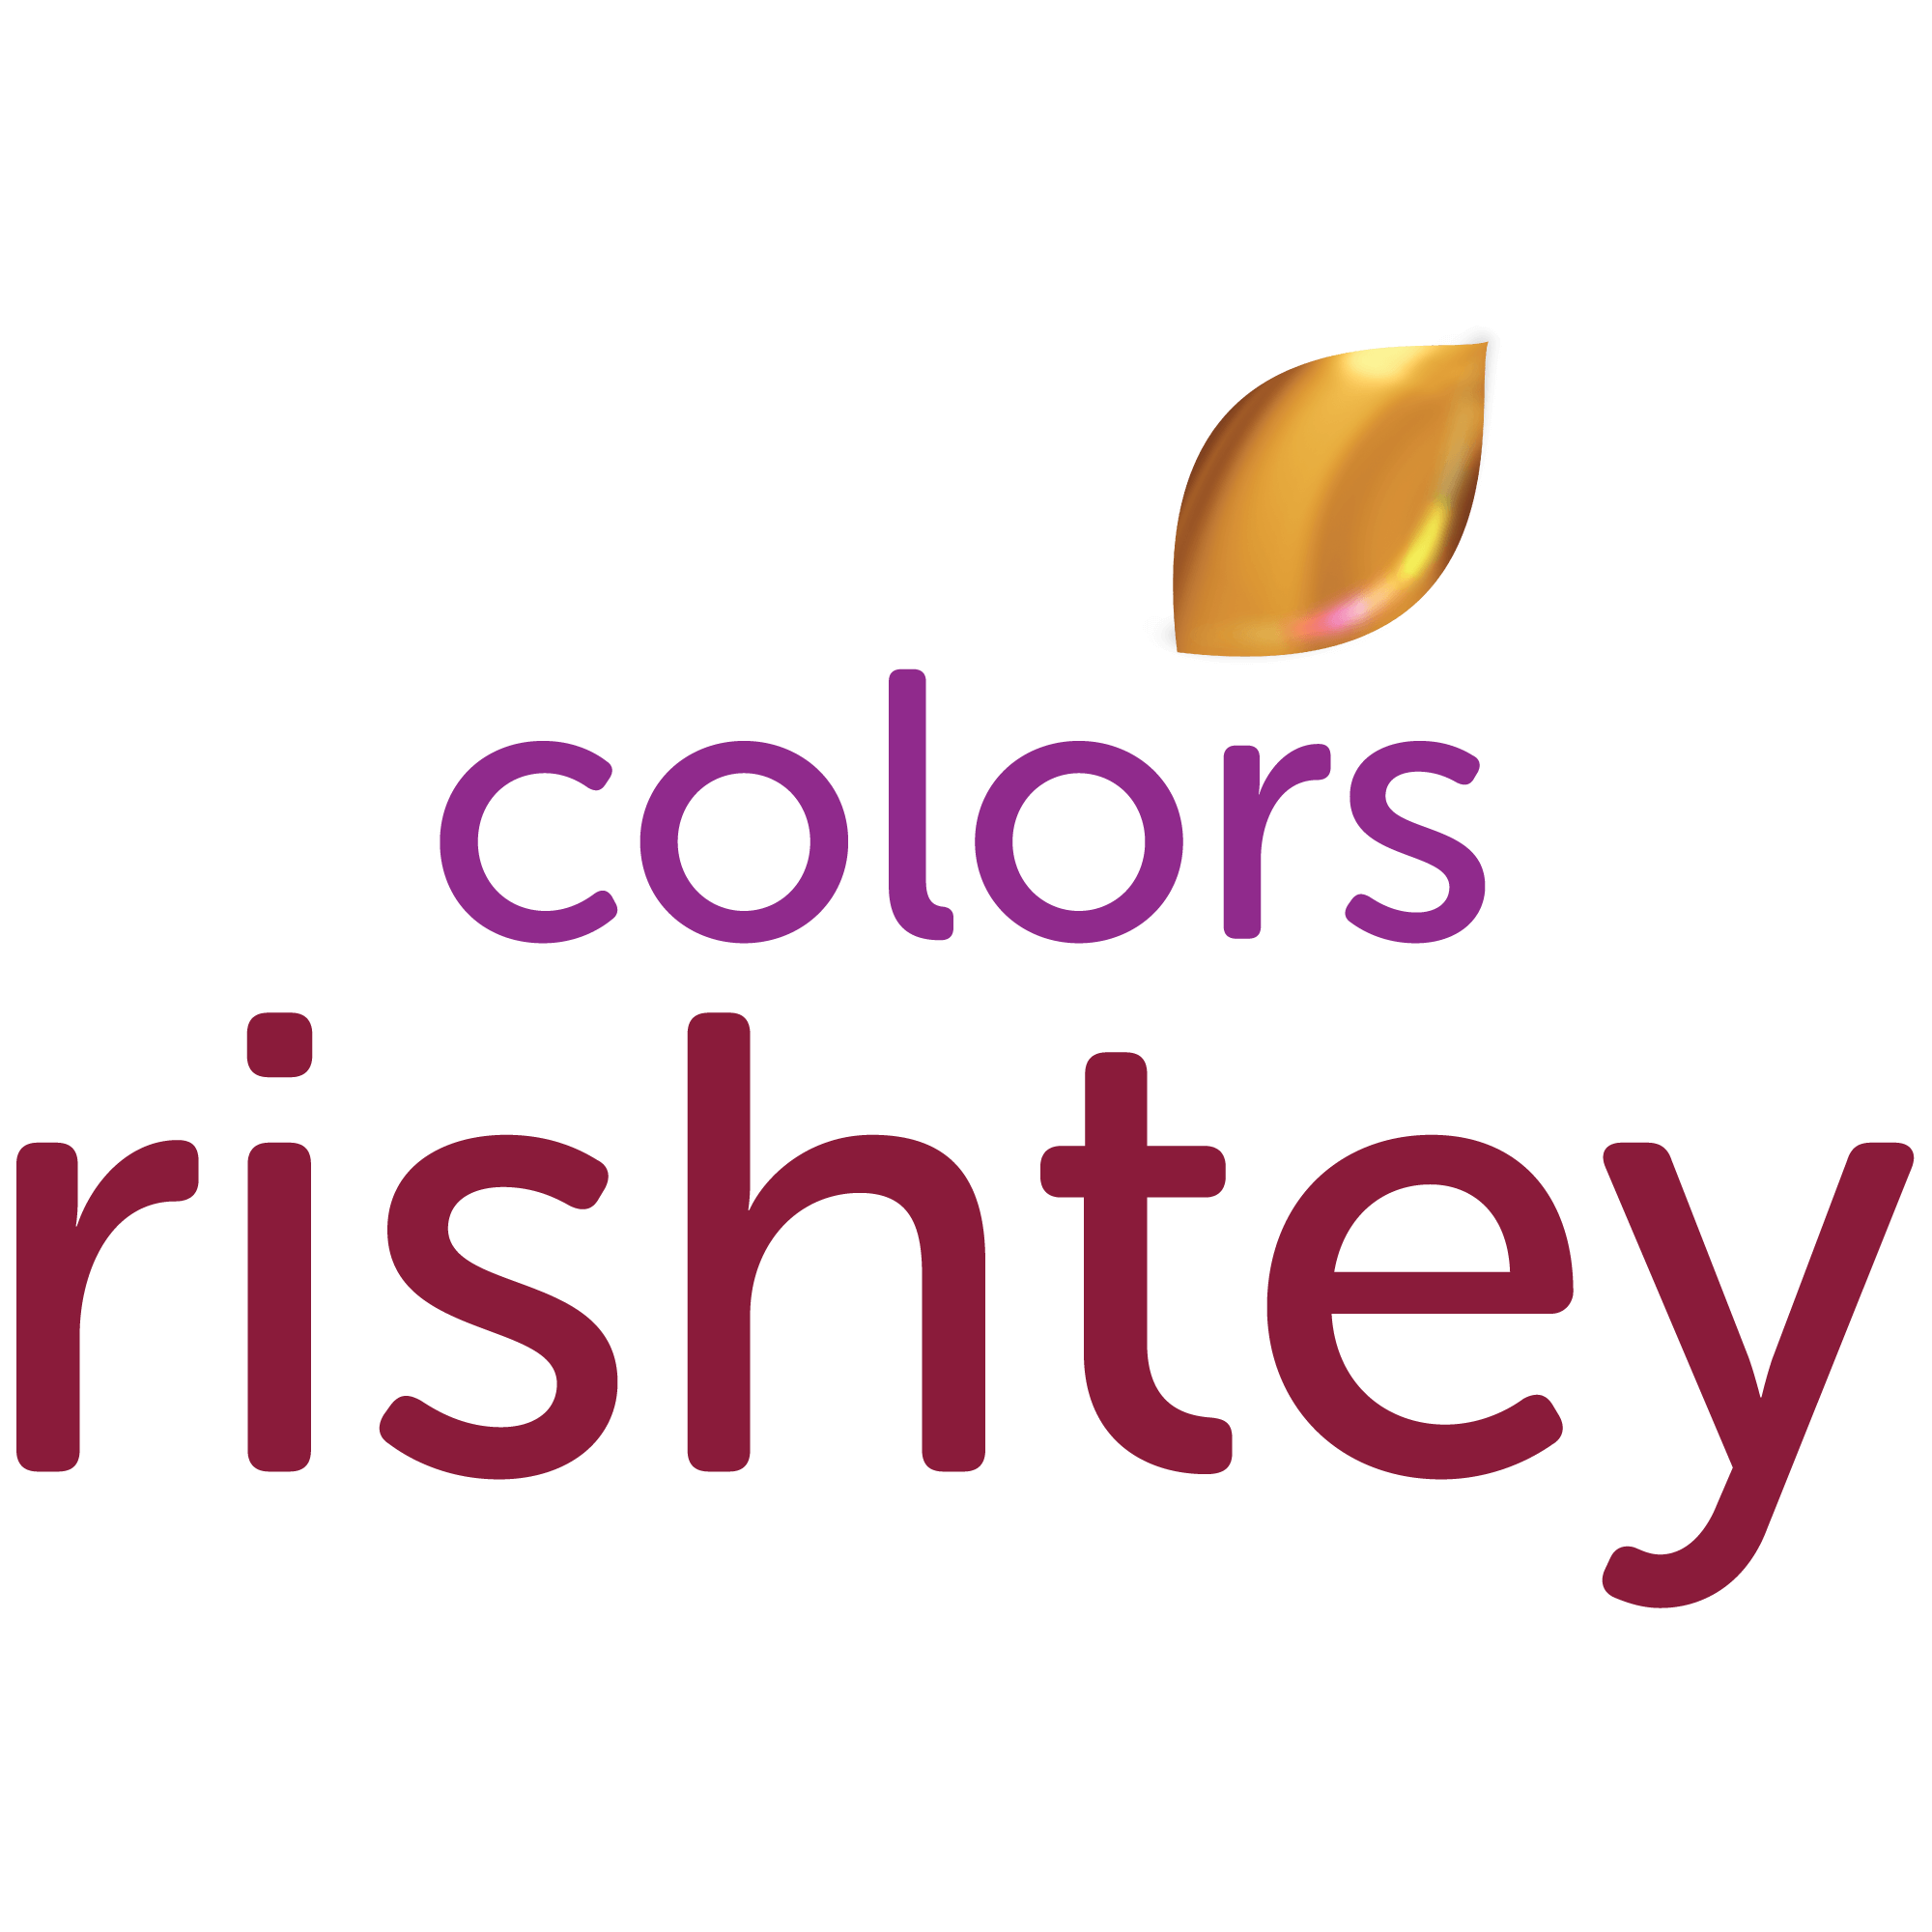 Colors Rishtey logo Transparent Image